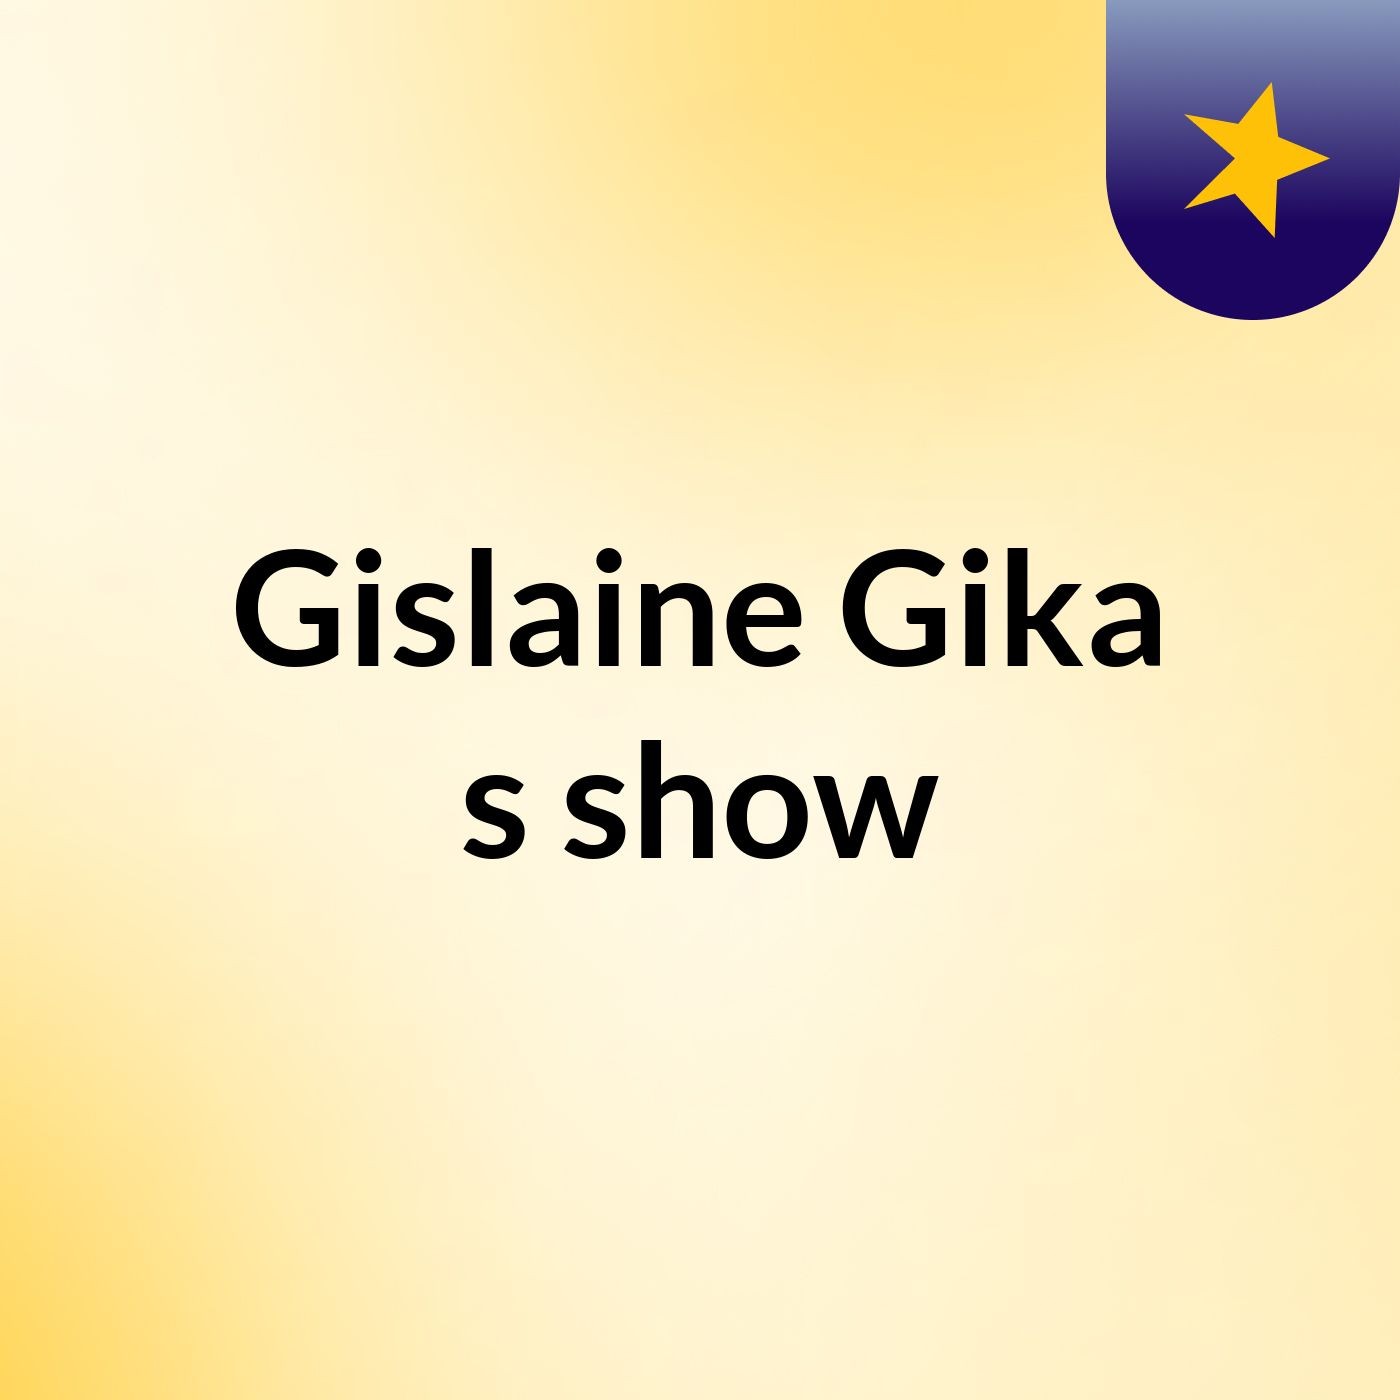 Gislaine Gika's show